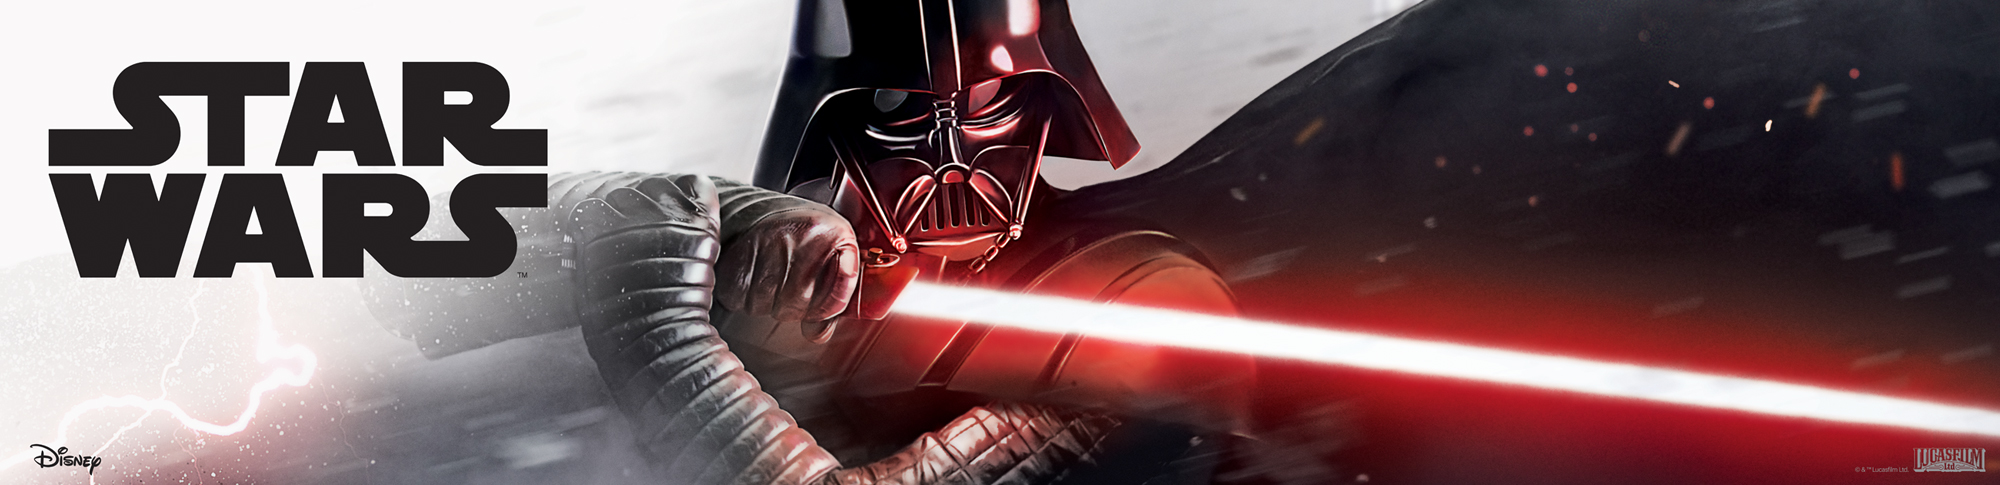 Star Wars. Darth Vader holding light saber. Disney. Lucasfilm.